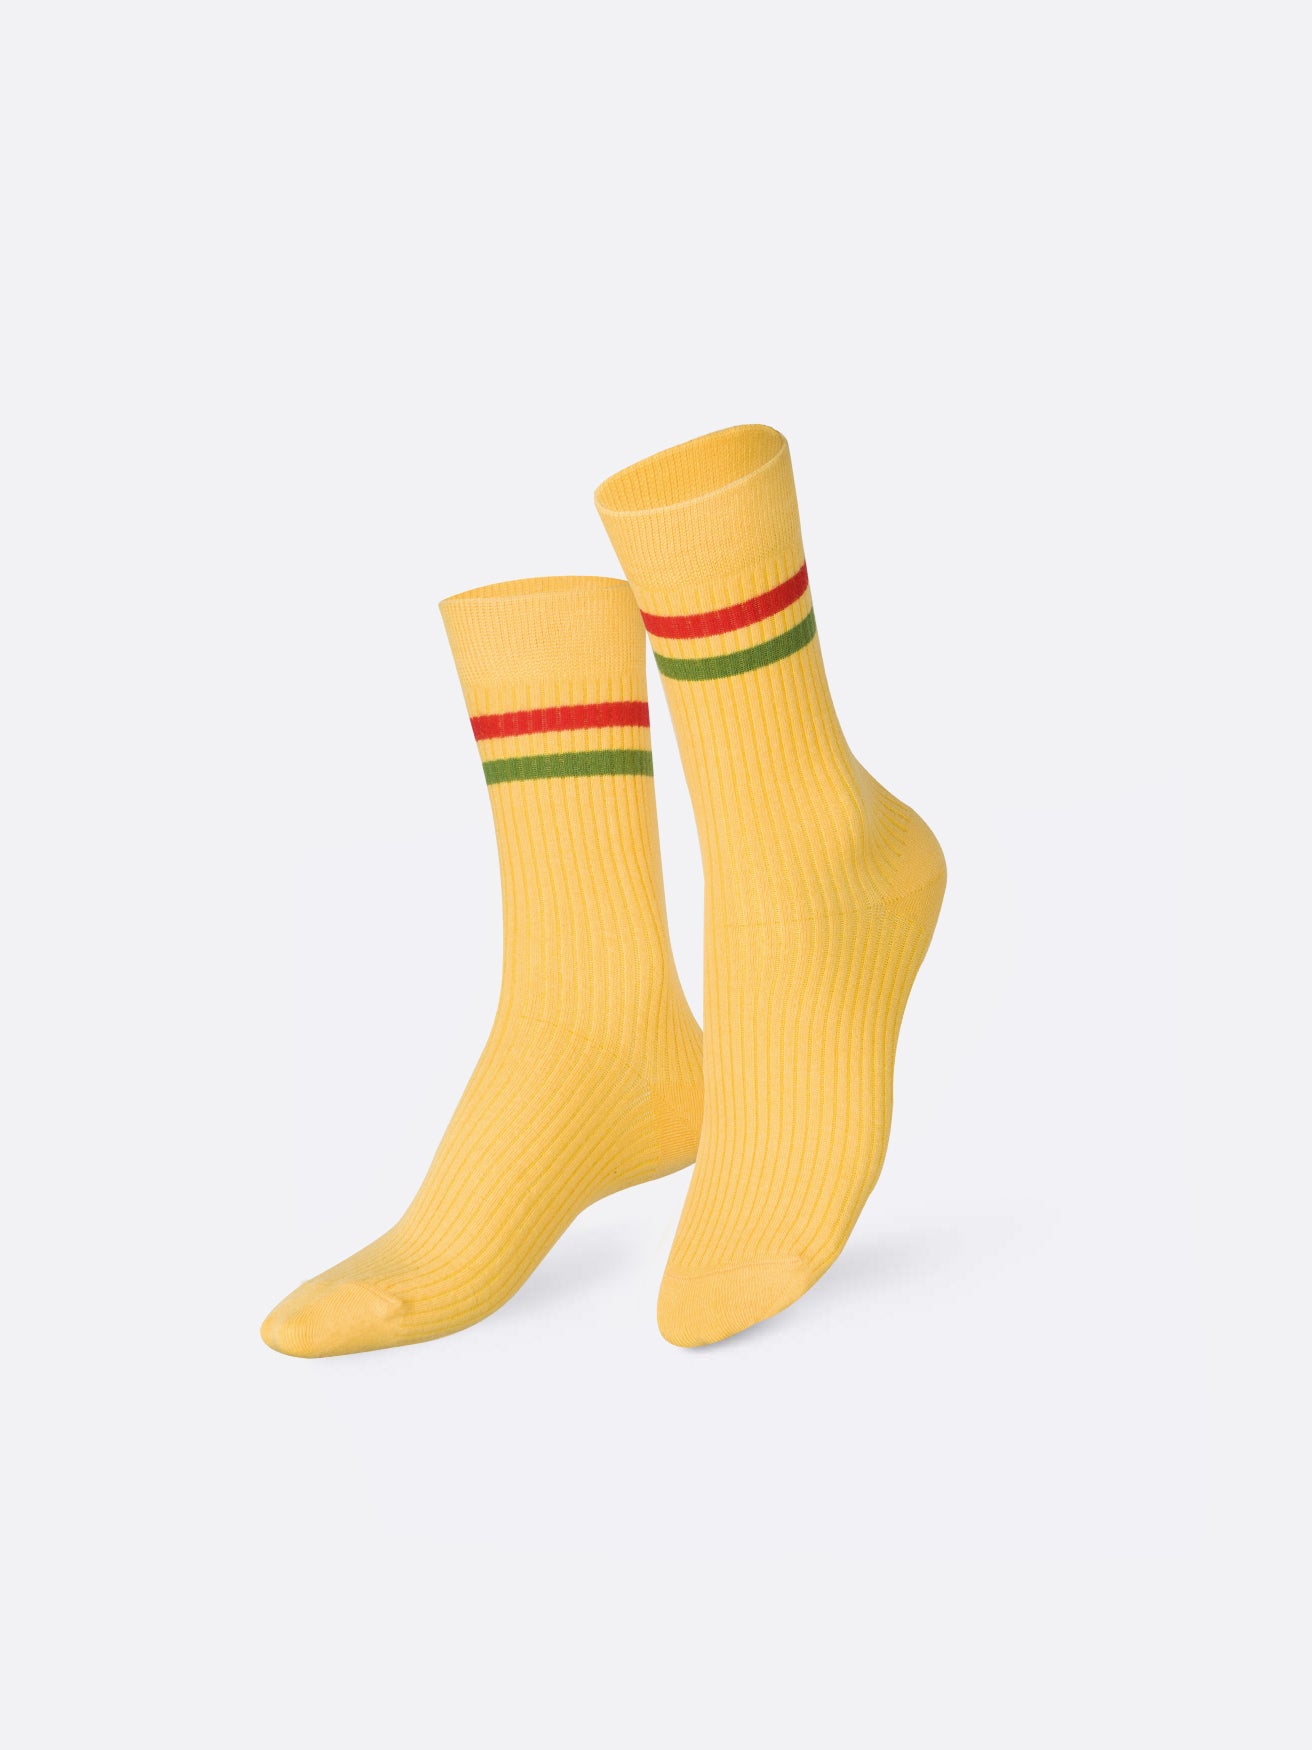 Socks - spaghetti | Eat my socks